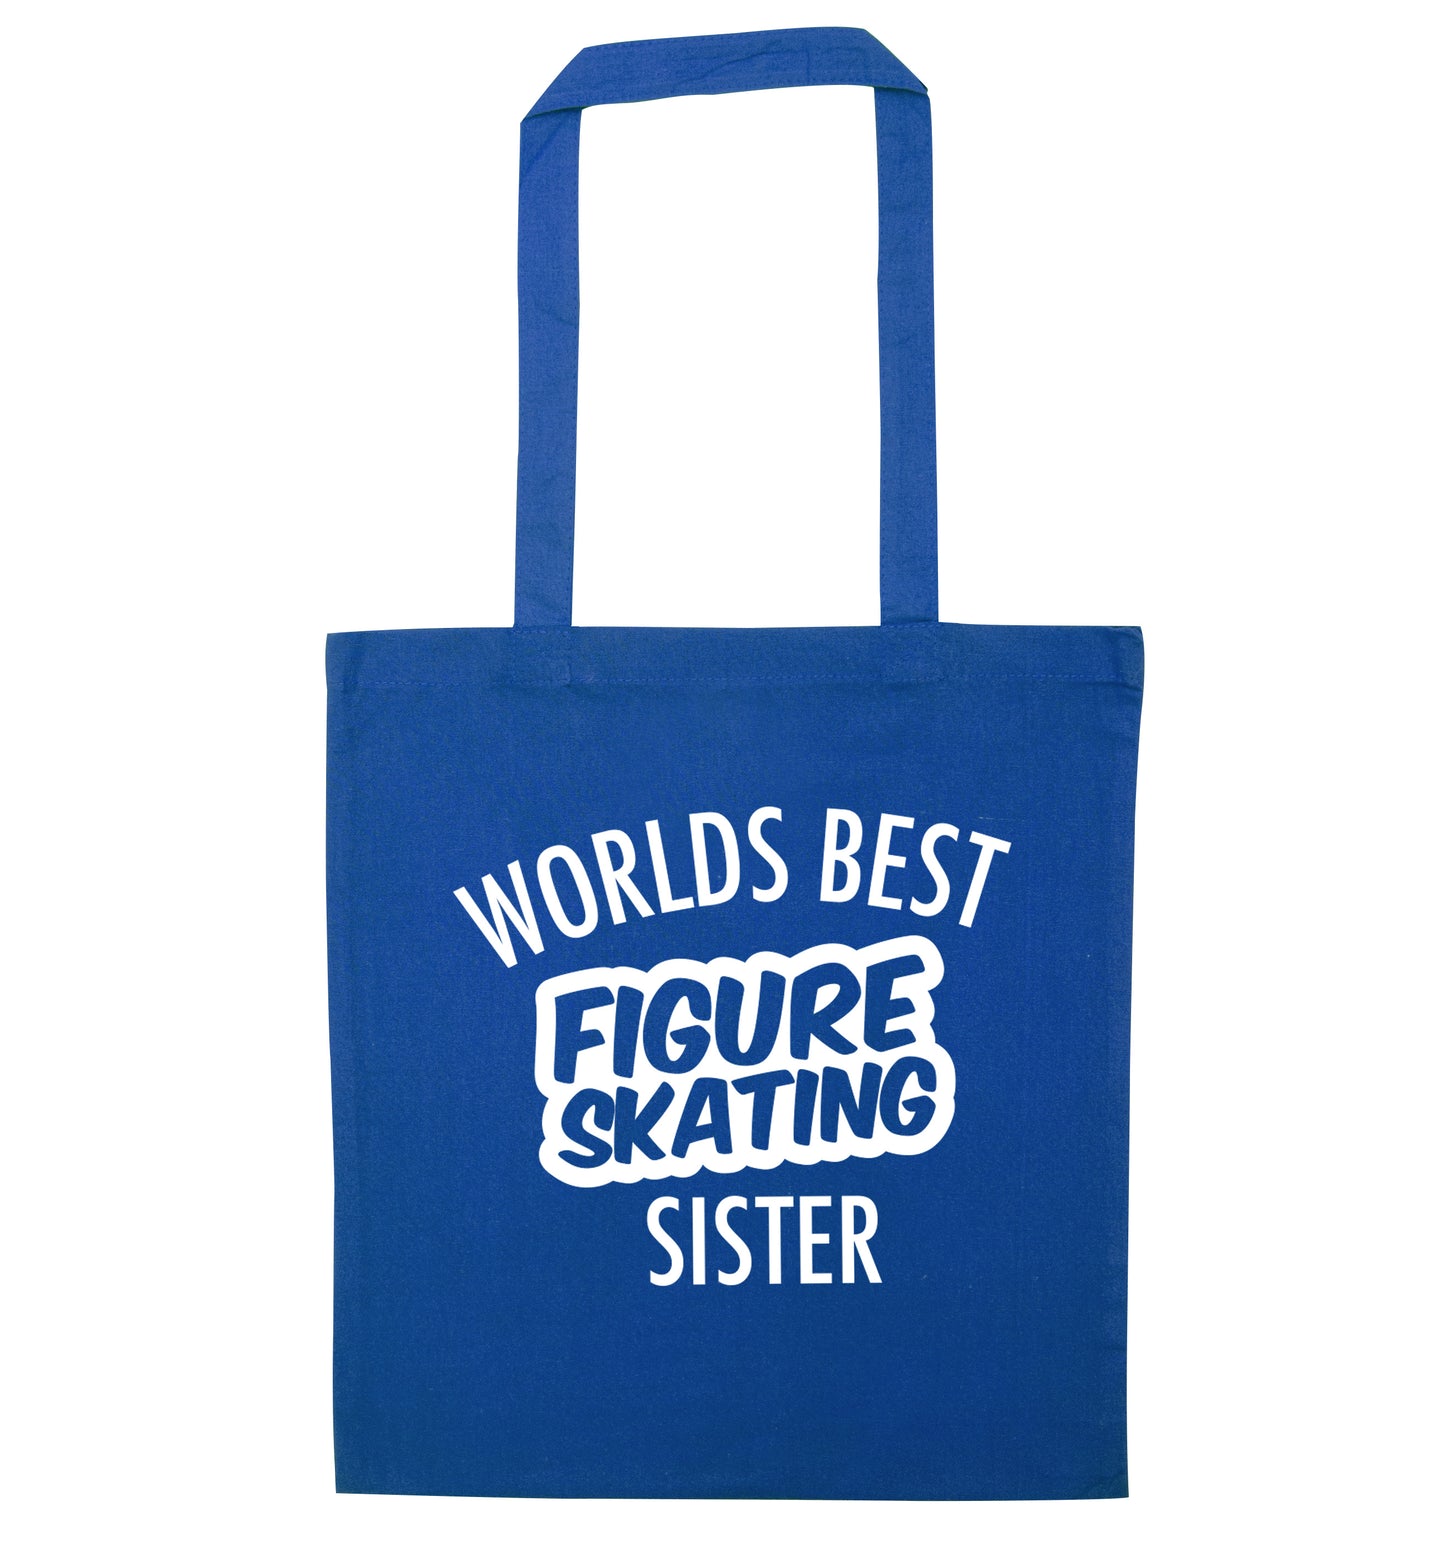 Worlds best figure skating sisterblue tote bag